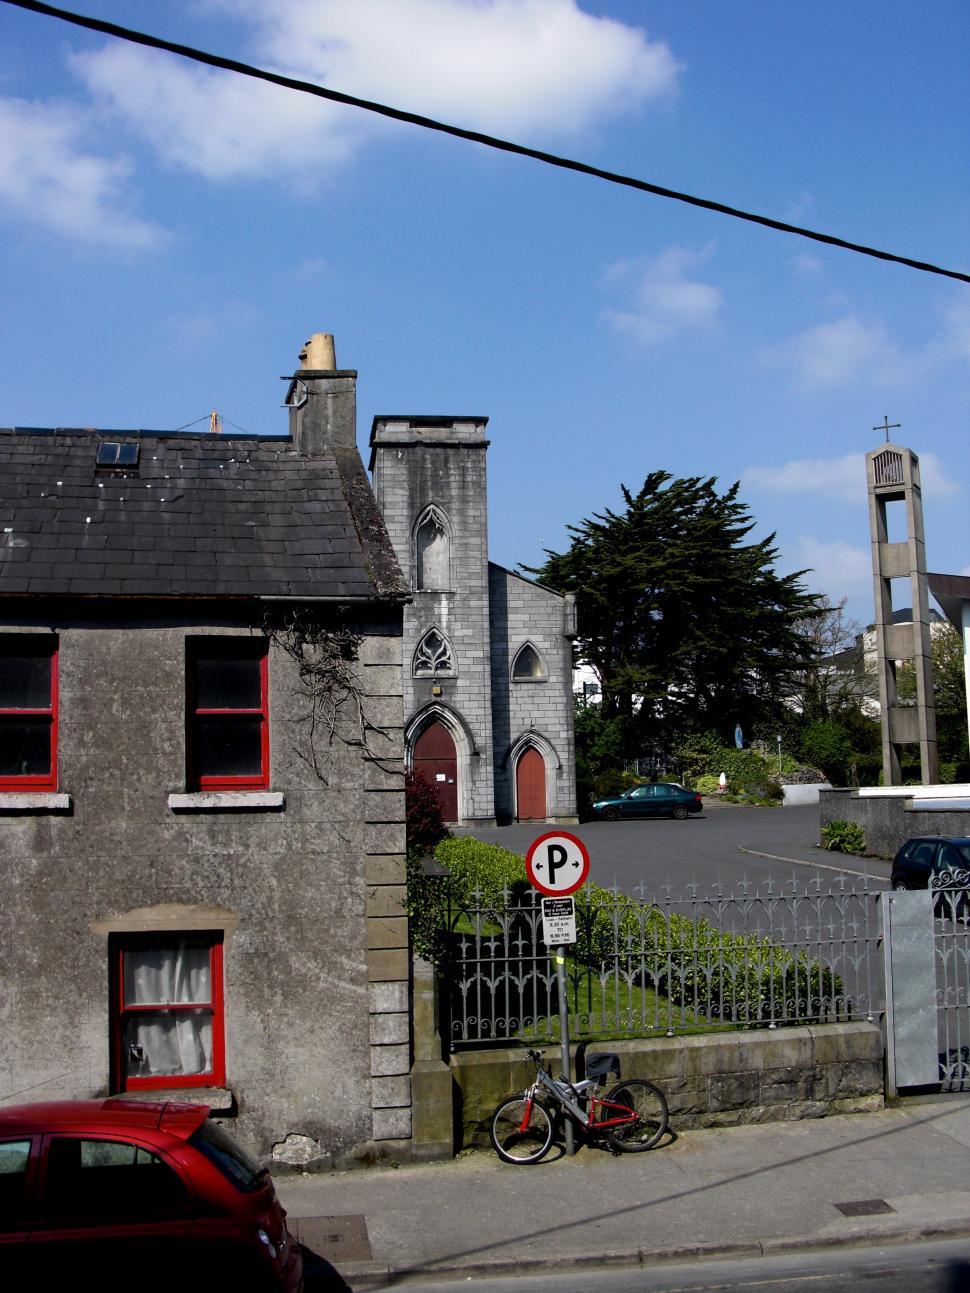 Free Image of Ireland - Galway Church 